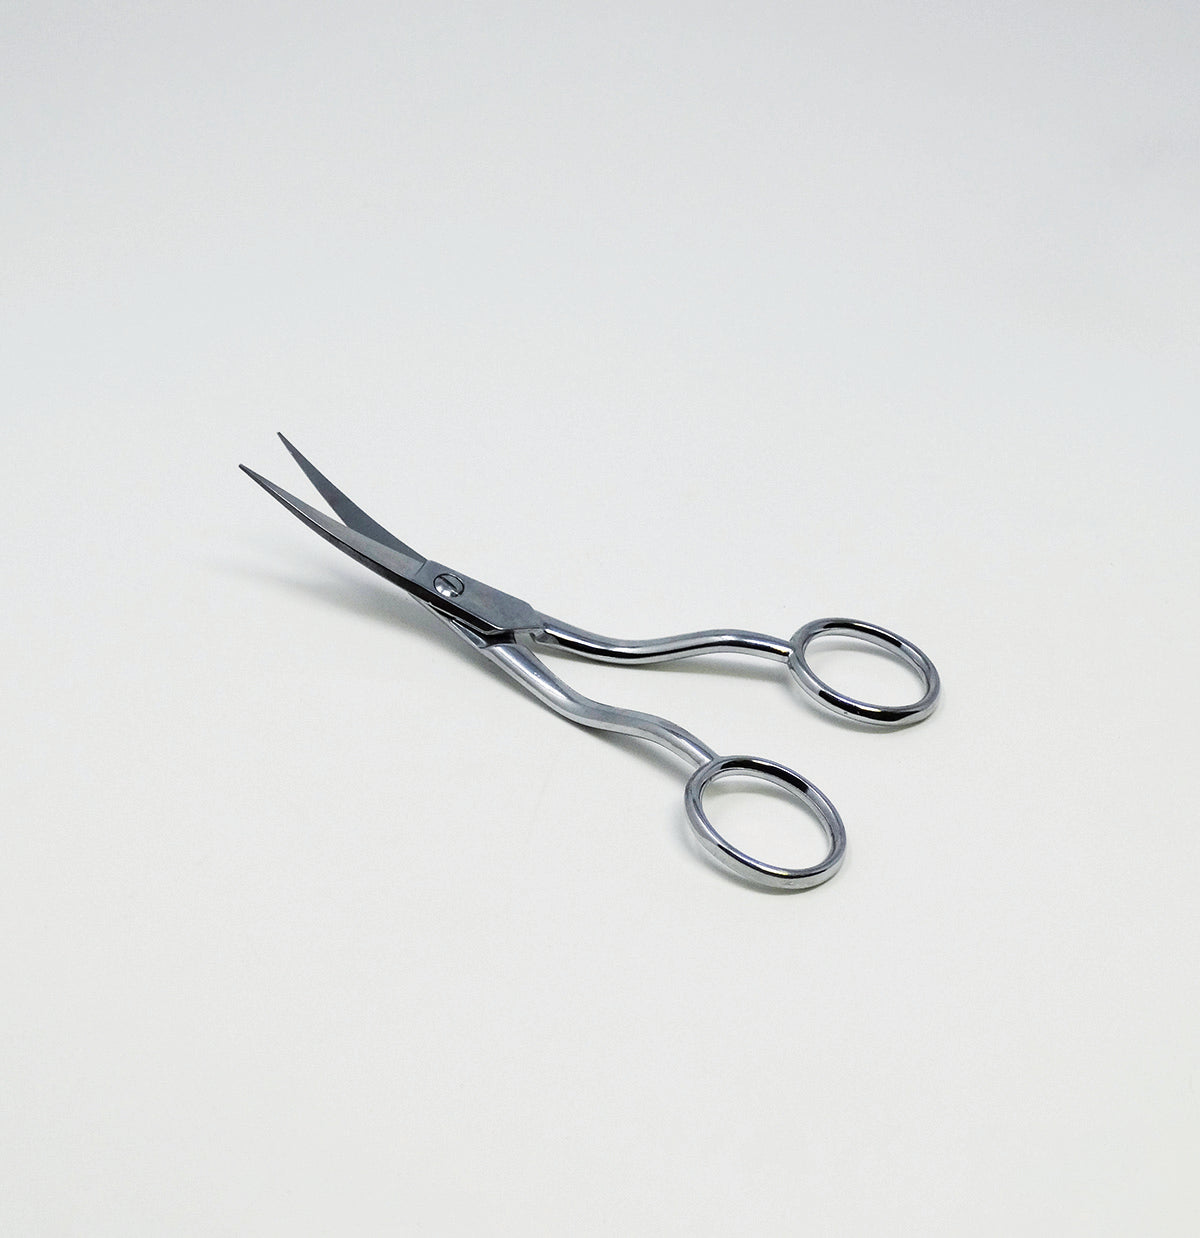 Madeira Art. No. 9491: Double Curvature Embroidery Scissors for Maximum Precision